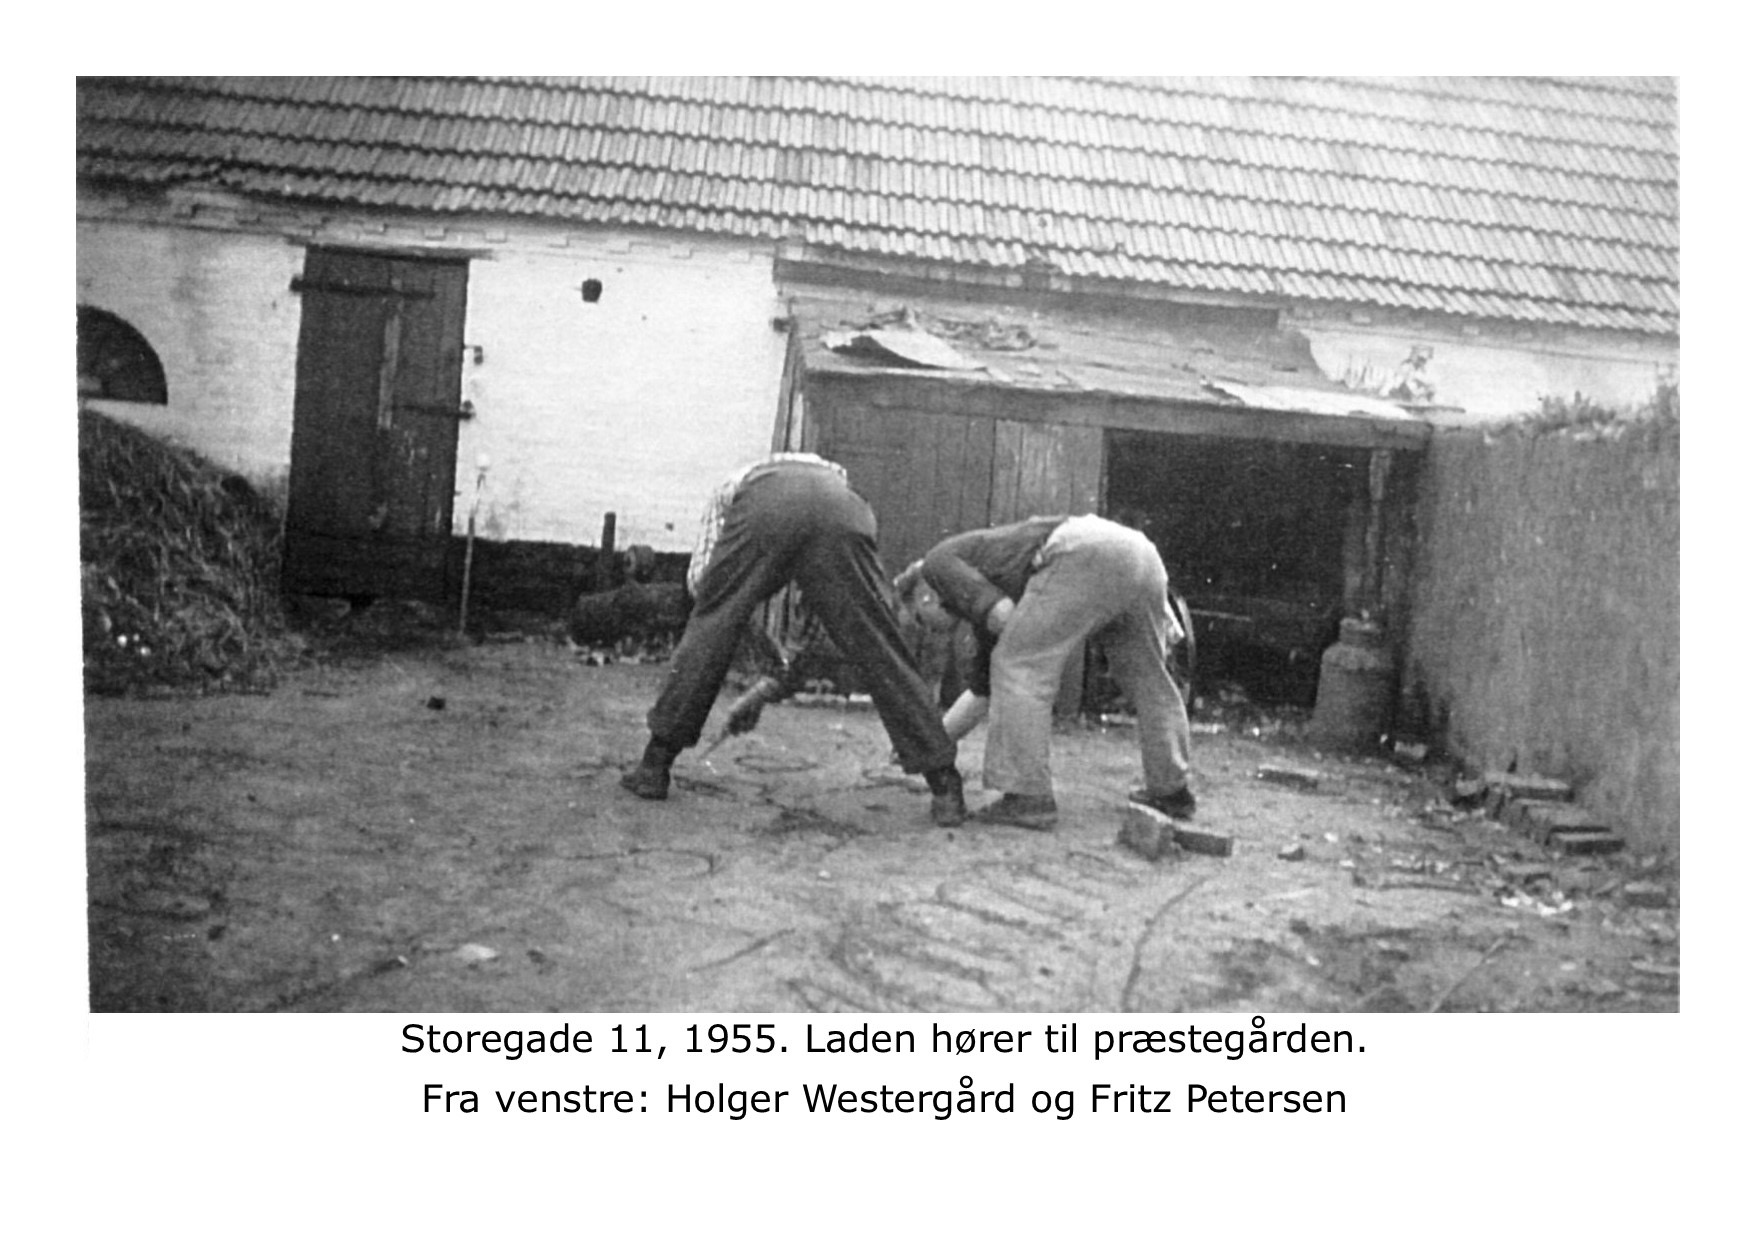 Holger Wesyergaard og Fritz Petersen 1955 